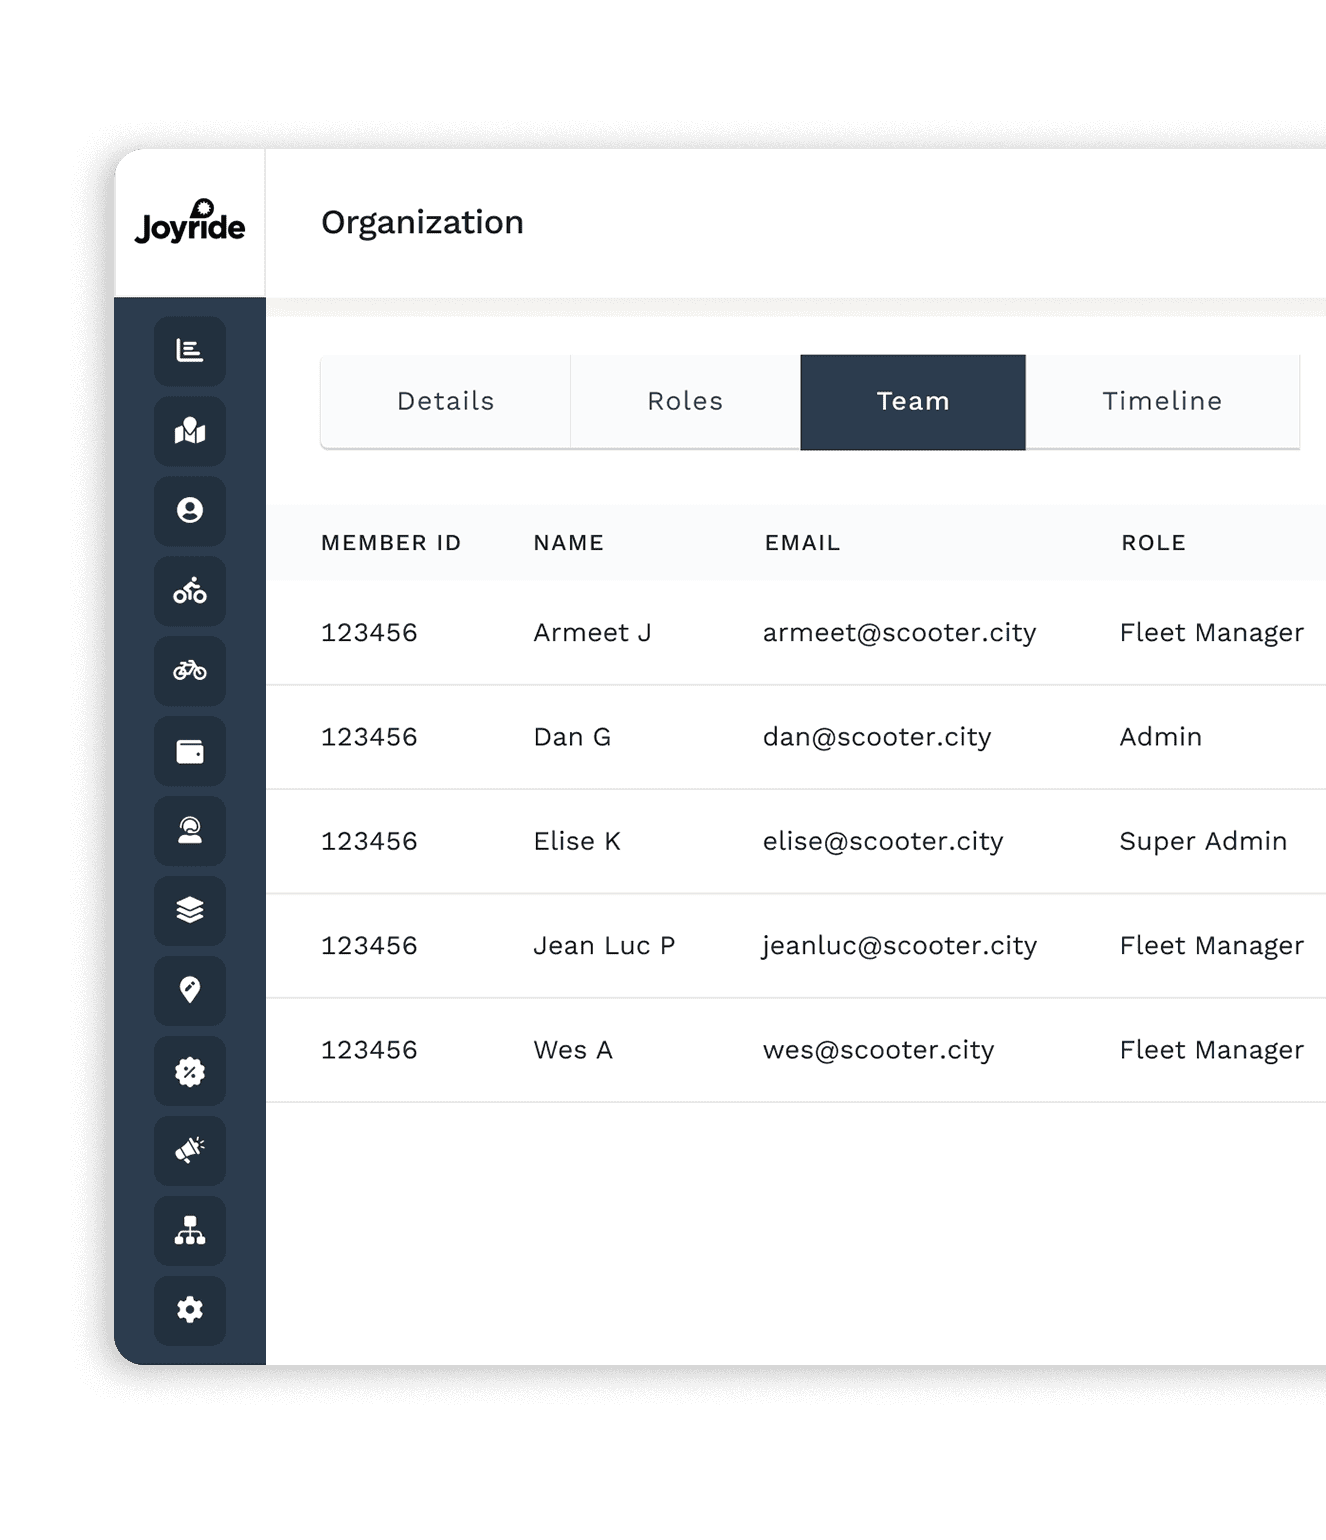 Joyride fleet management dashboard user roles